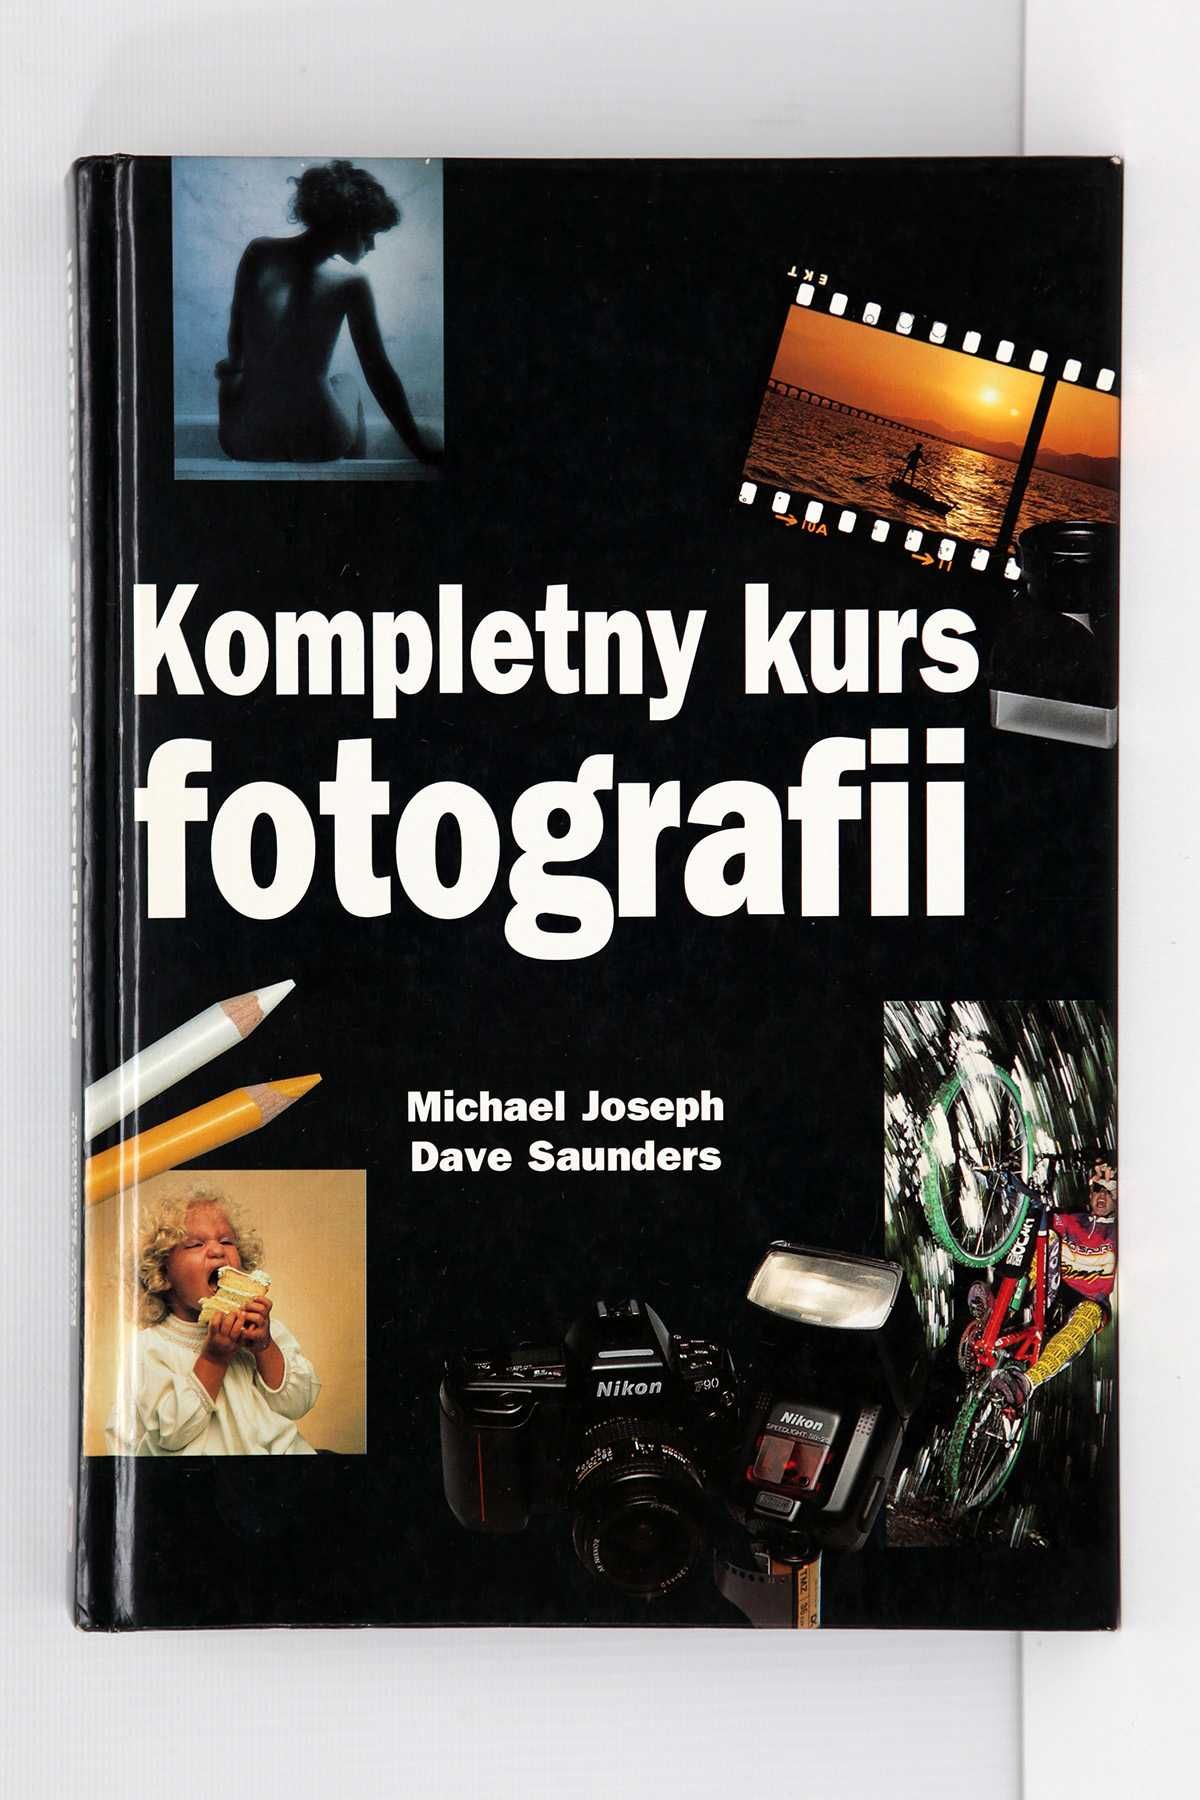 Kompletny kurs fotografii Michael Joseph Dave Saunders